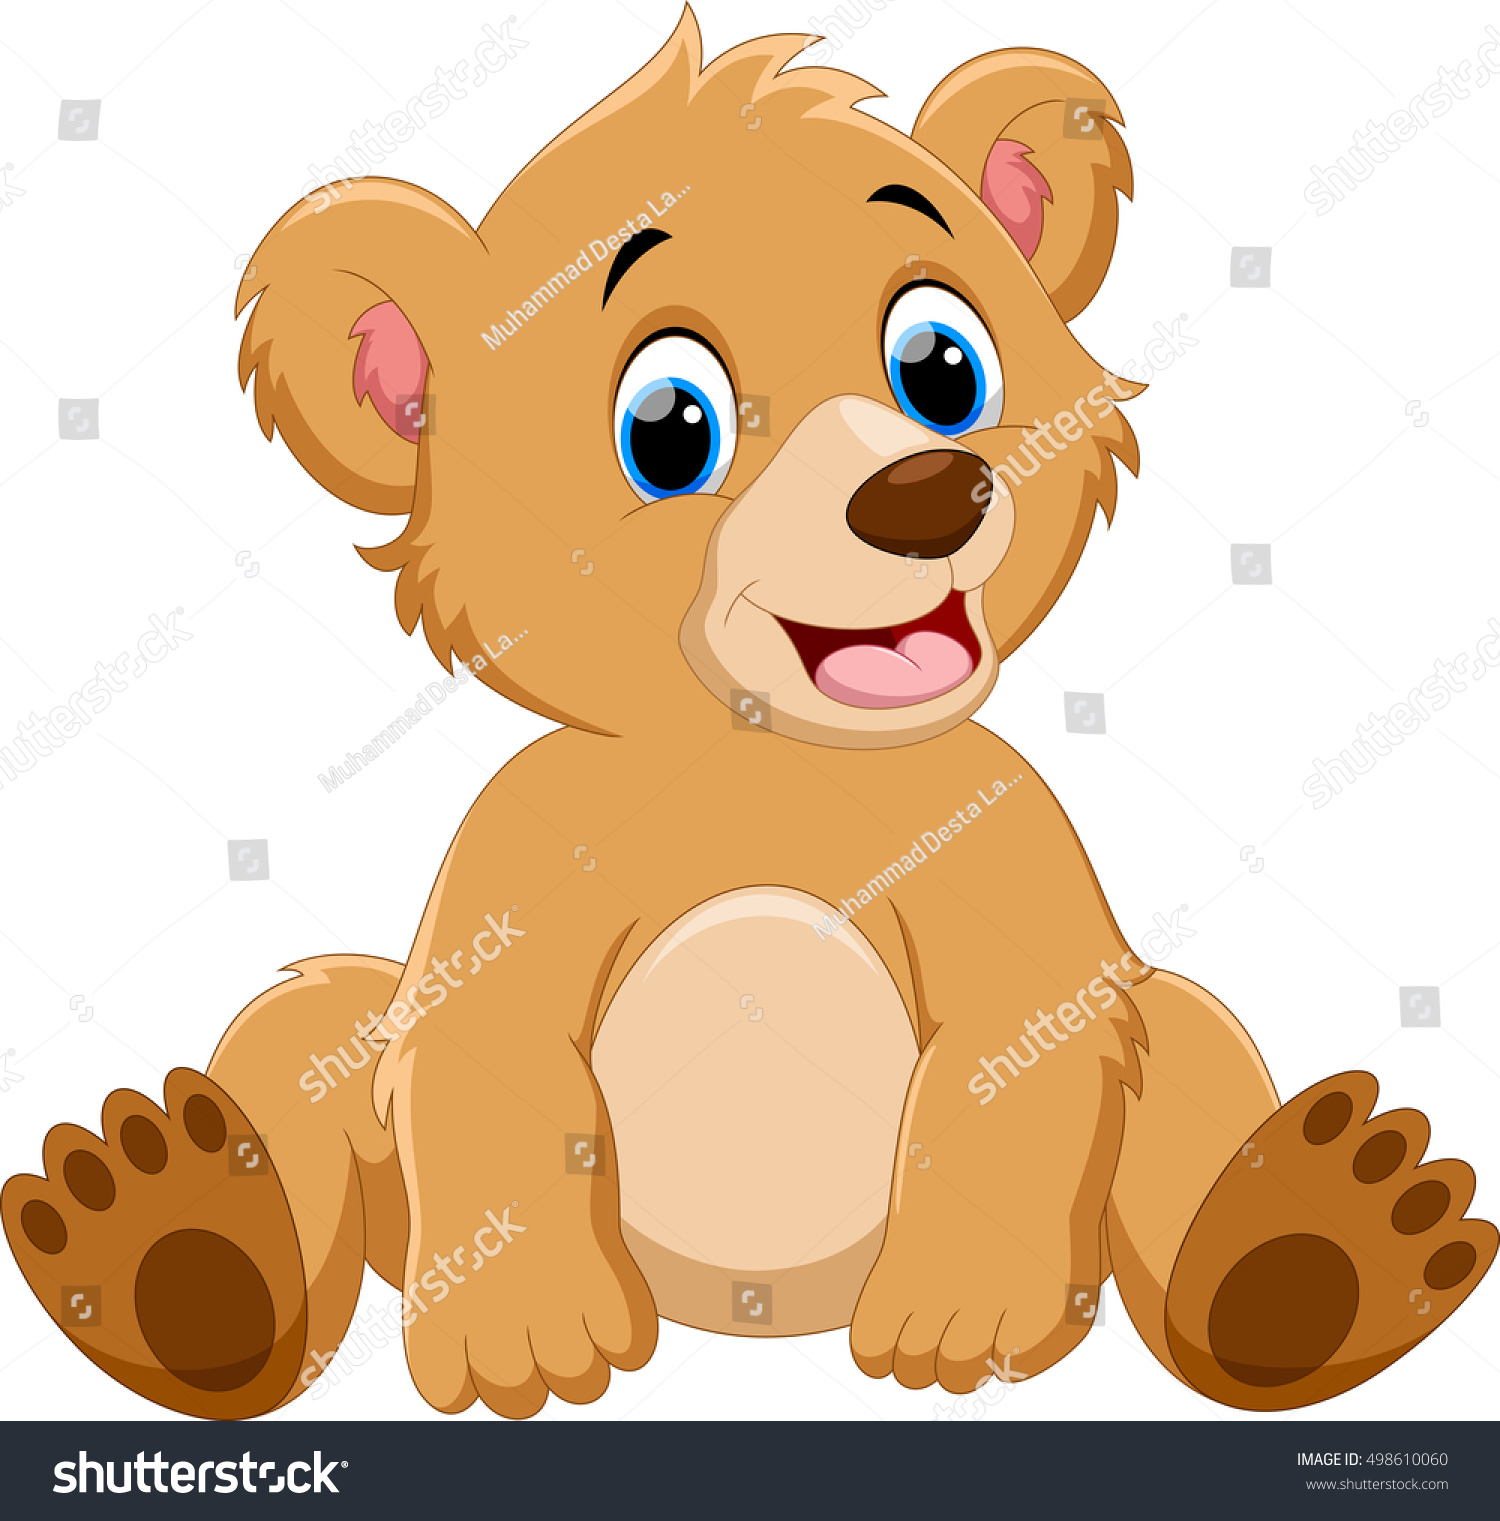 Download Cute Baby Bear Cartoon Stock Vector 498610060 - Shutterstock